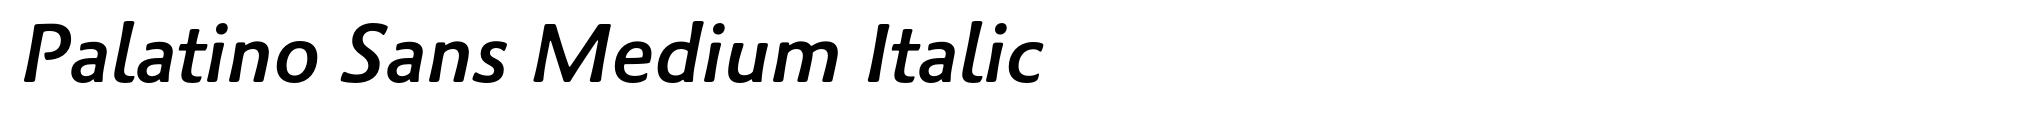 Palatino Sans Medium Italic image